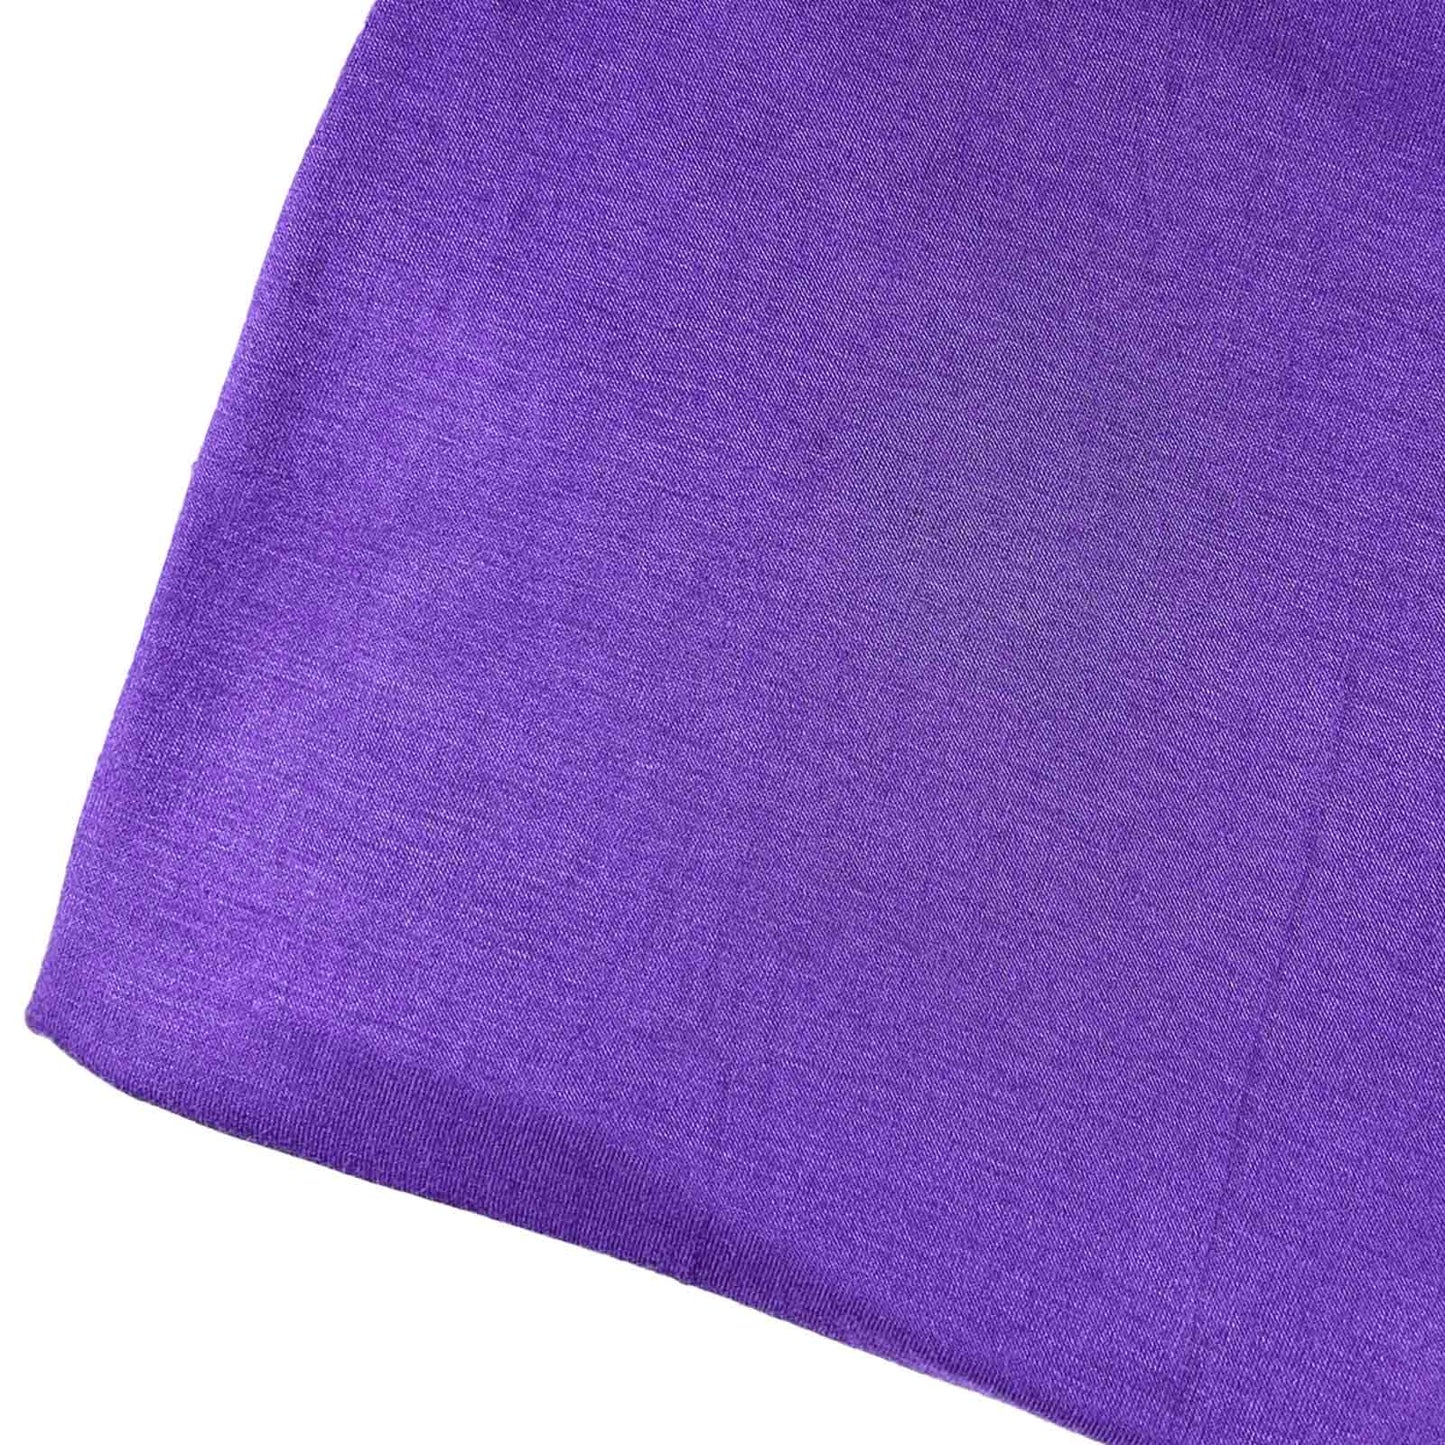 rectangular violet shayla hijab